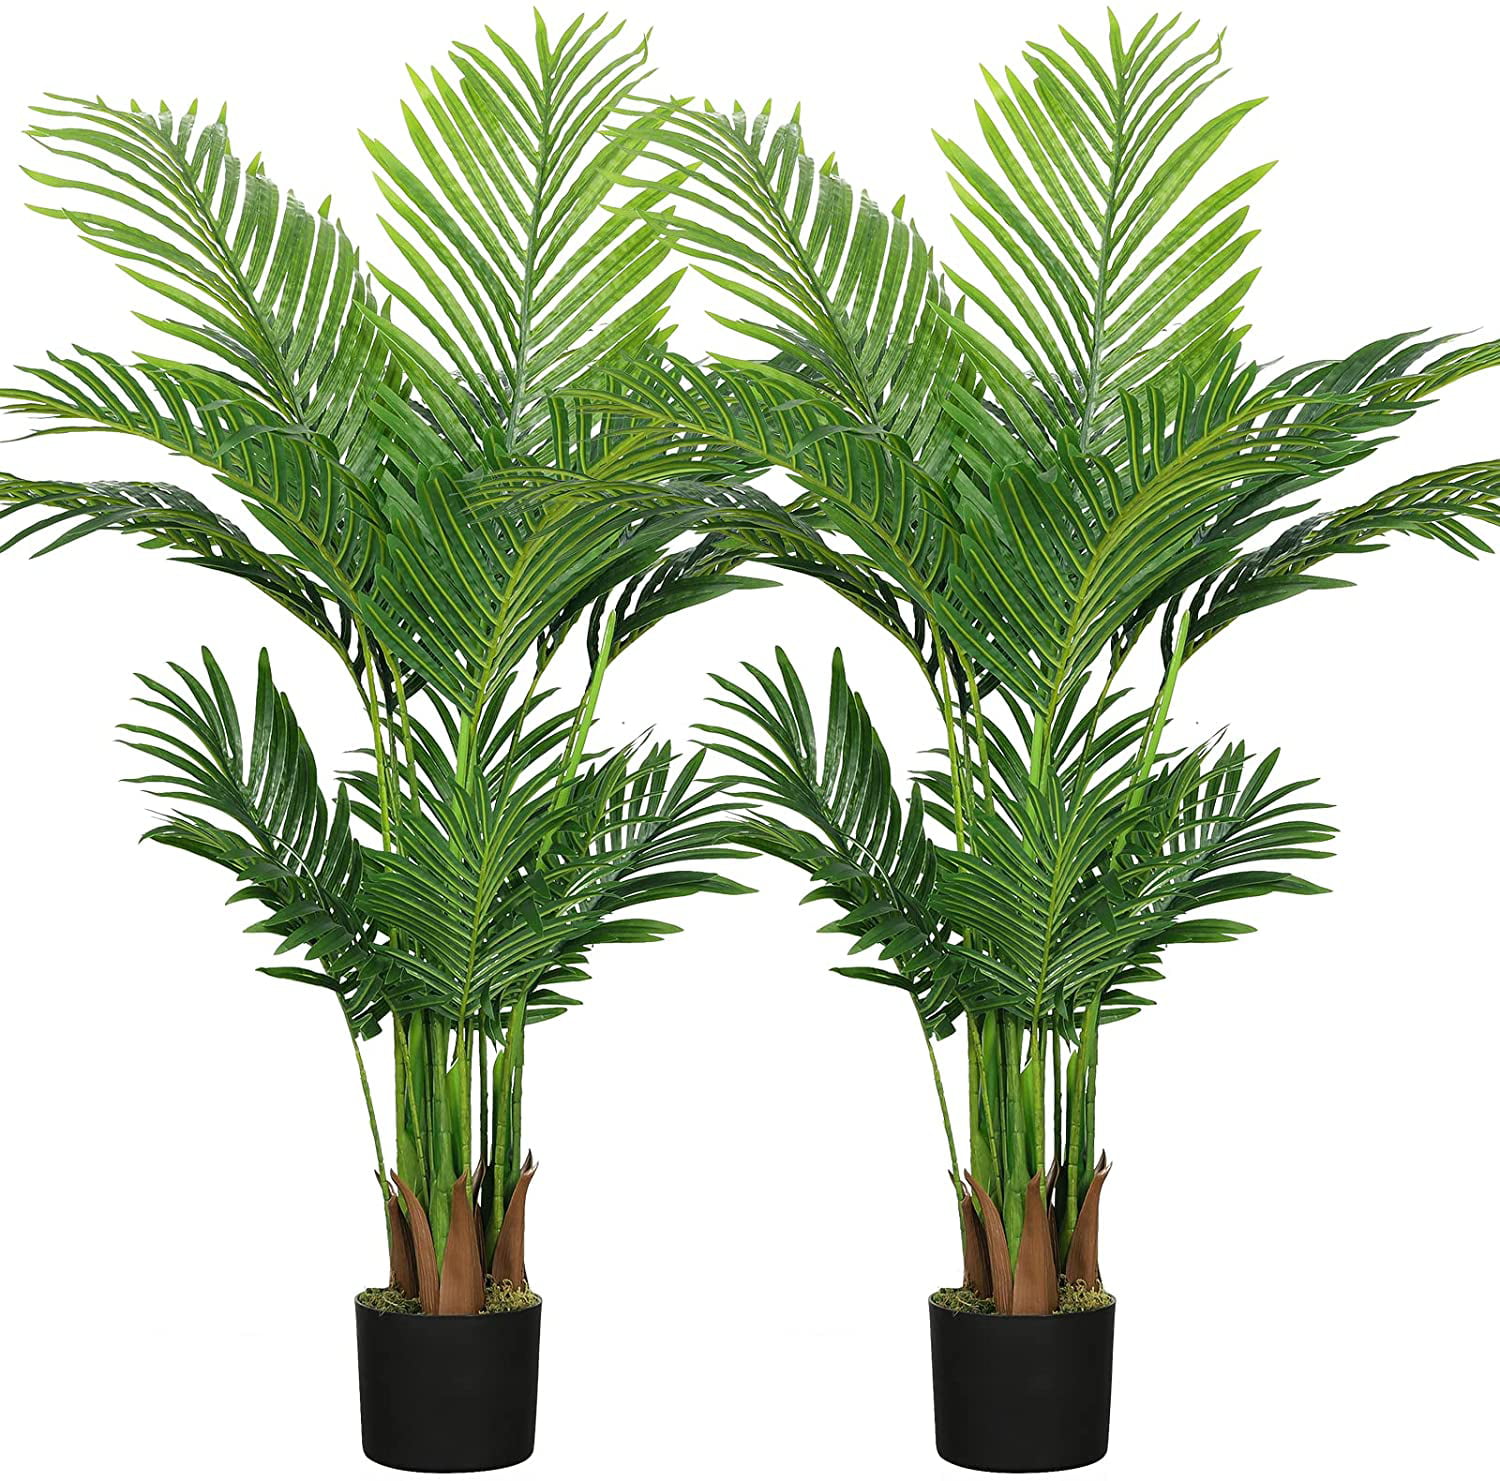 Artificial Palm Tree Faux Plants Décor Indoor Outdoor 